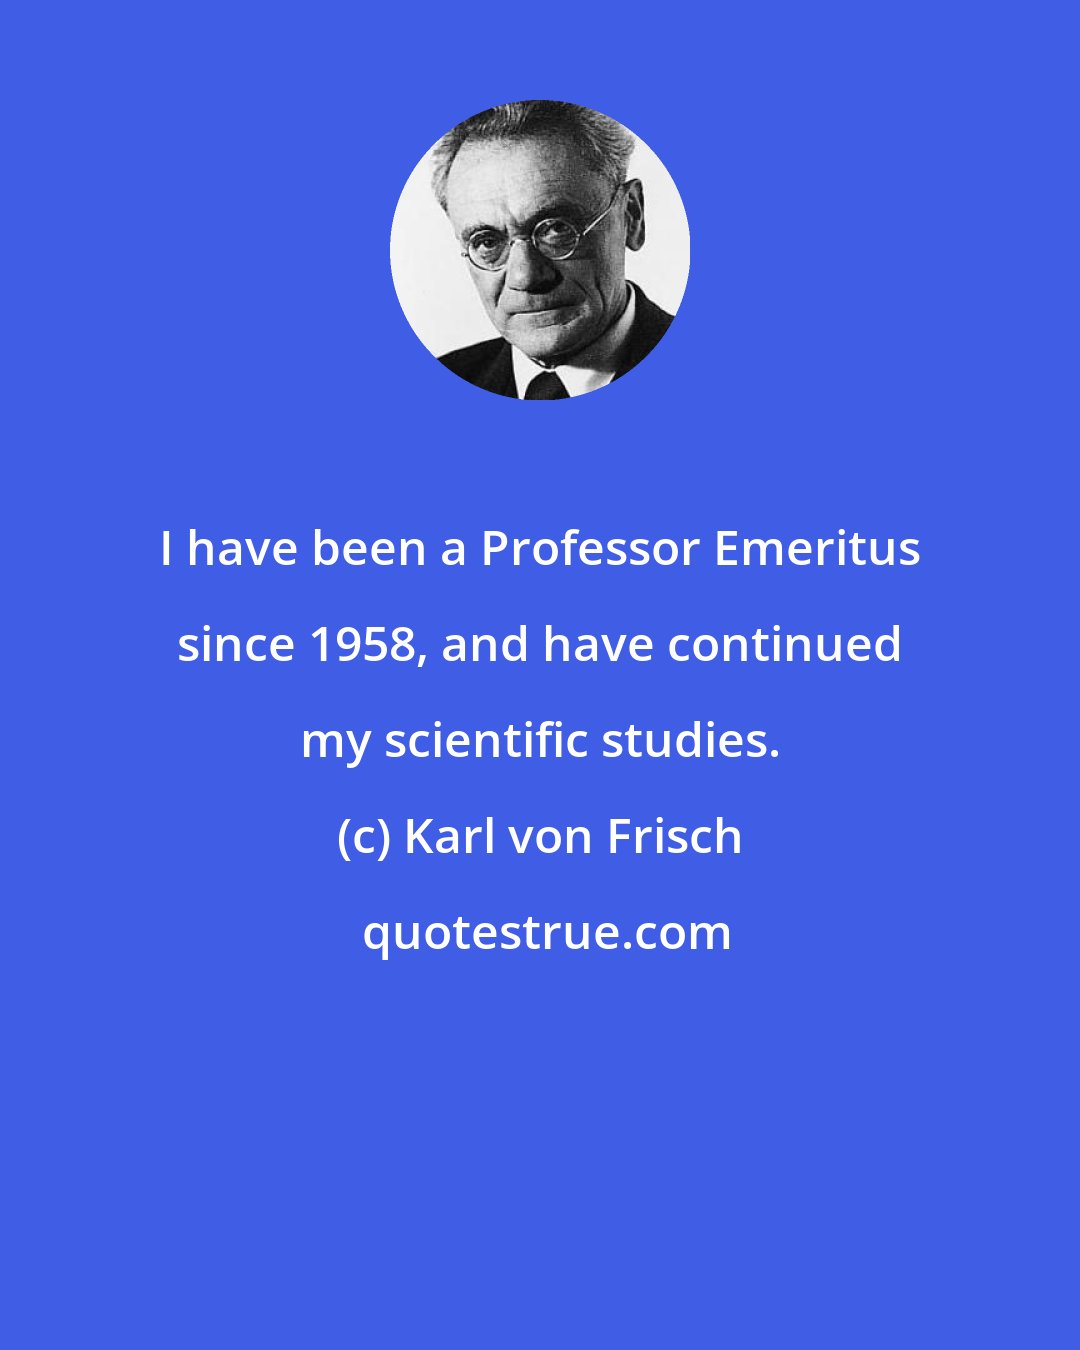 Karl von Frisch: I have been a Professor Emeritus since 1958, and have continued my scientific studies.